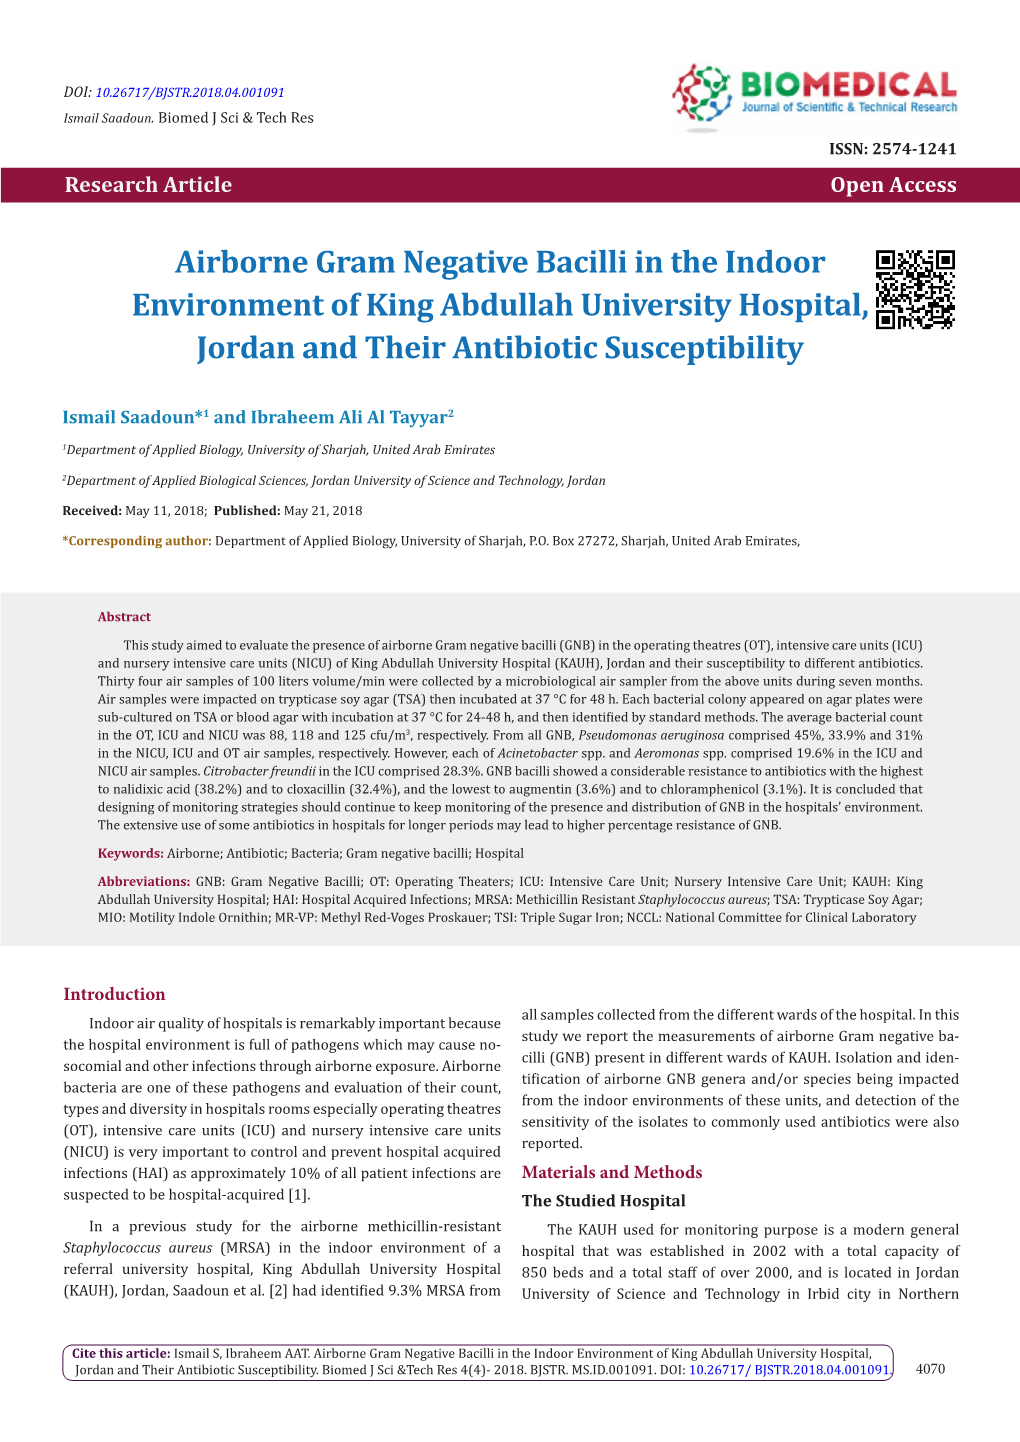 Airborne Gram Negative Bacilli in the Indoor Environment of King Abdullah University Hospital, Jordan and Their Antibiotic Susceptibility